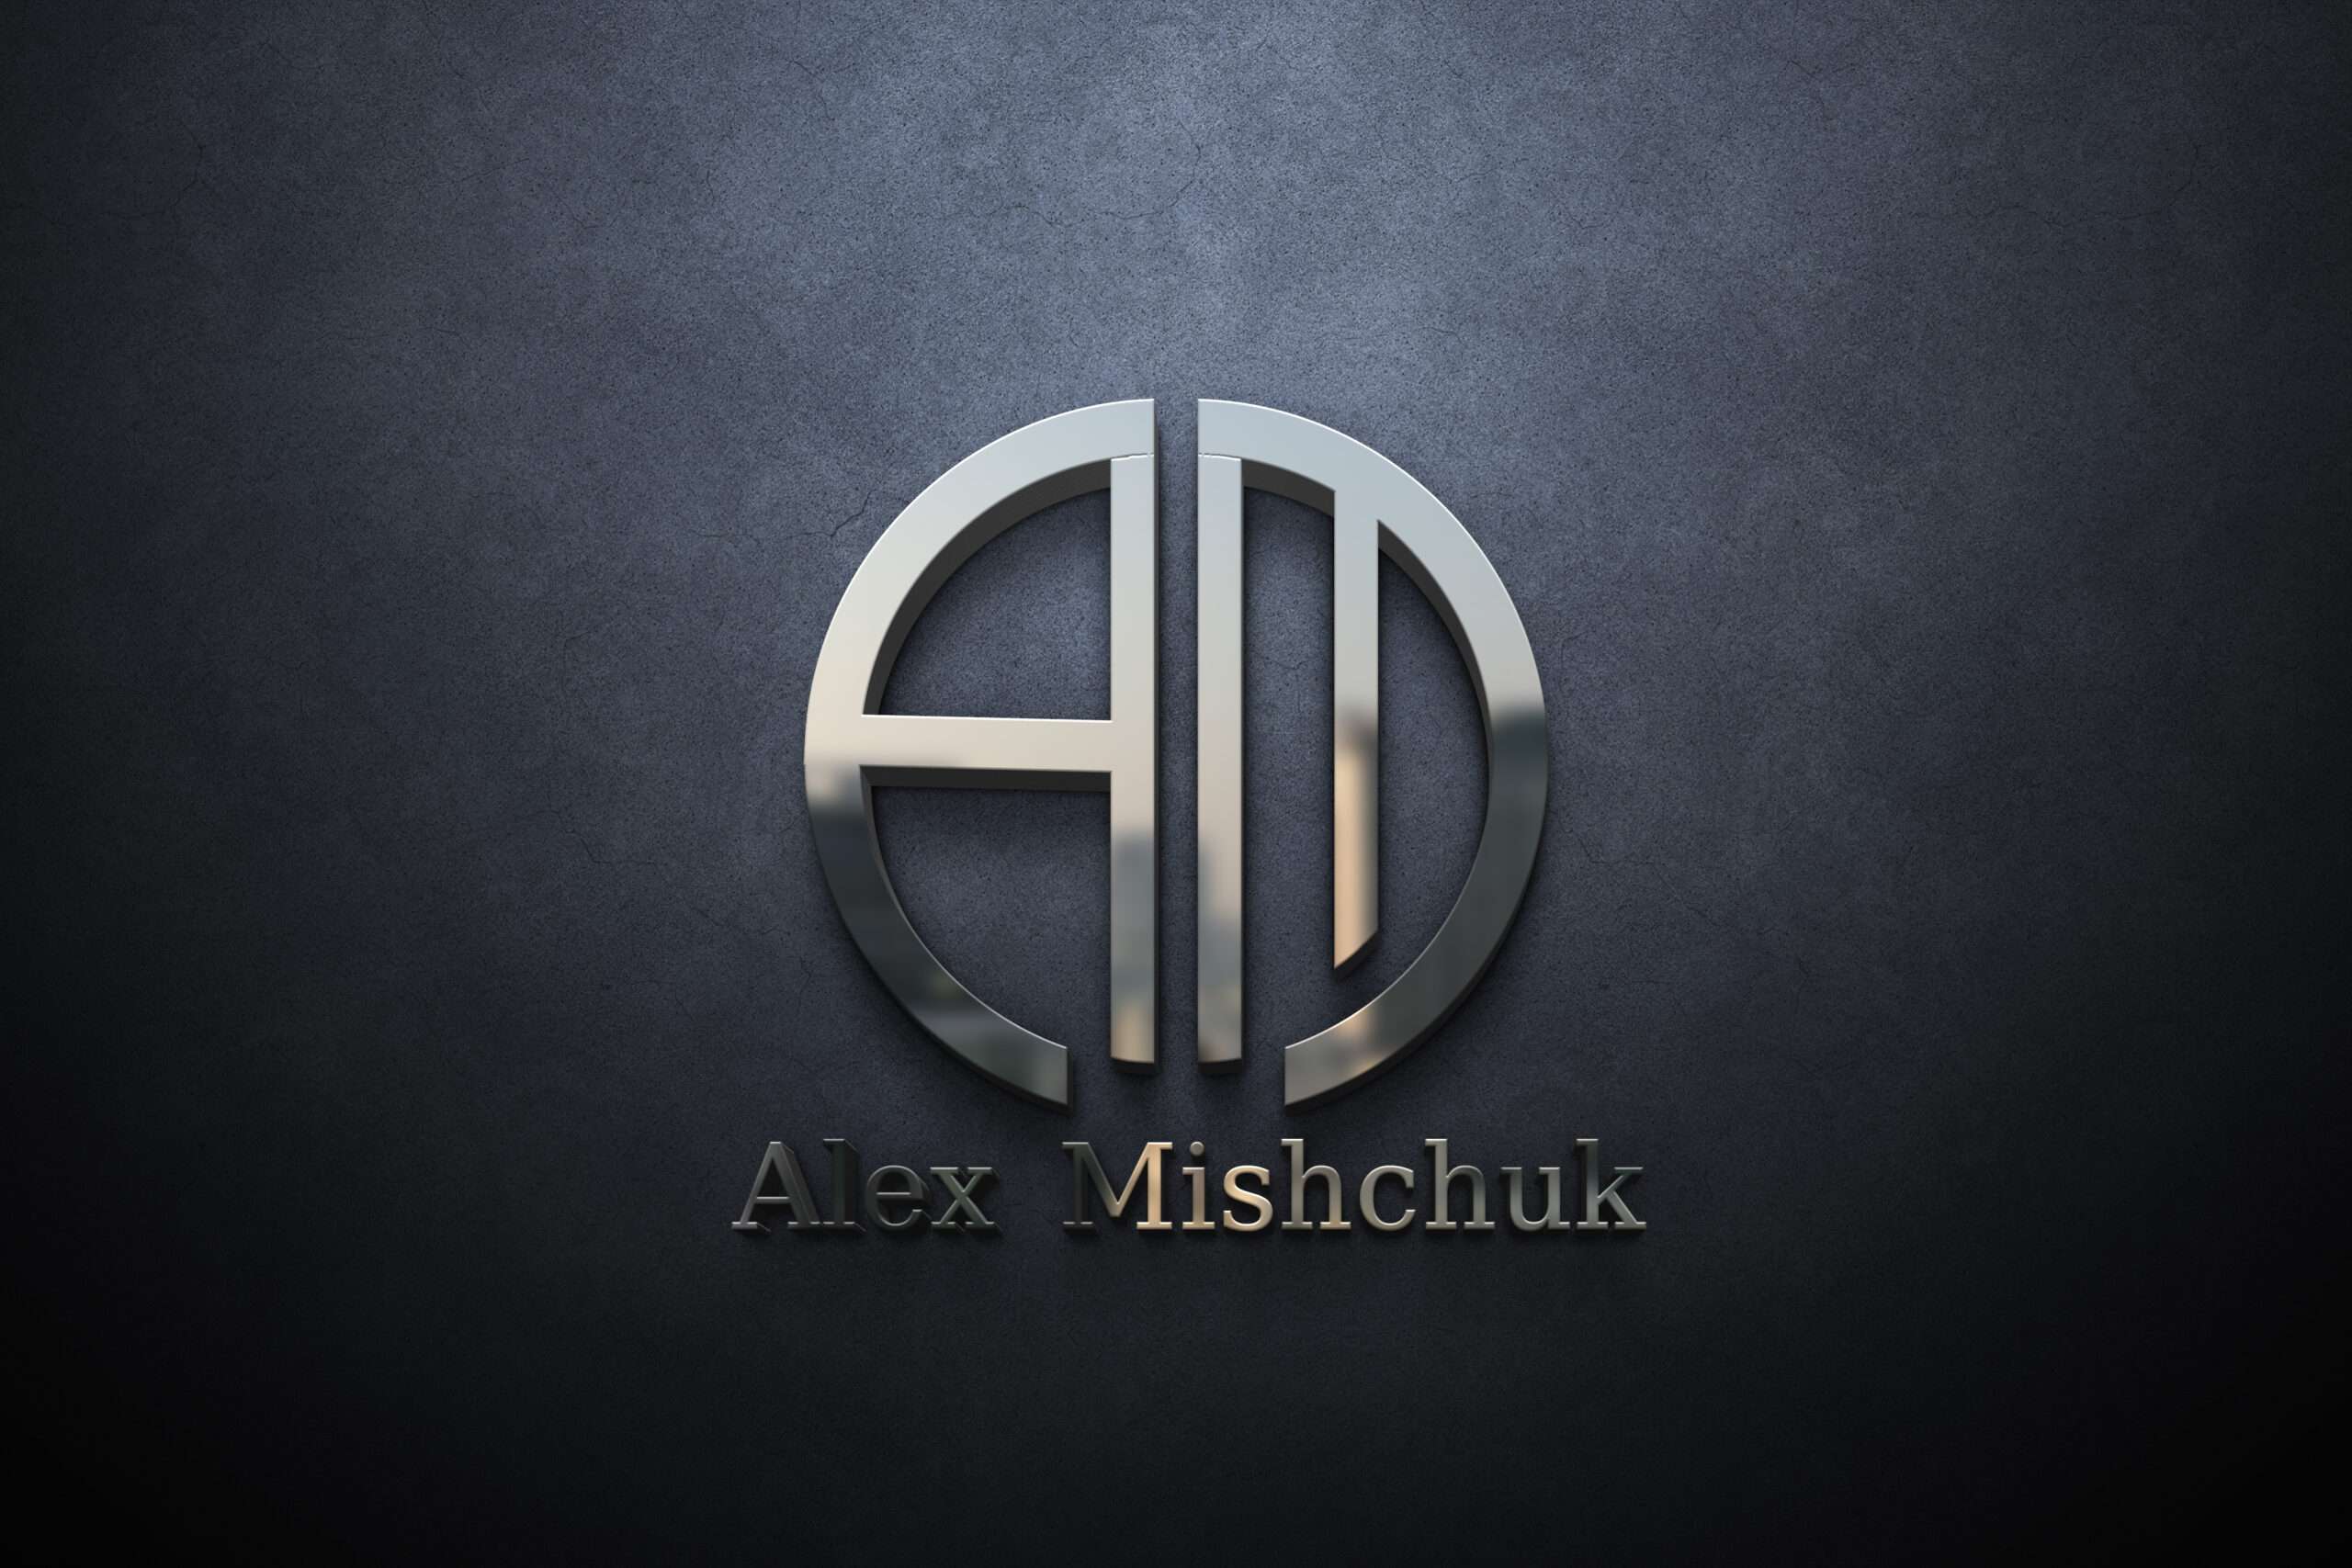 Alex Mishchuk logo design AM alphabet logo idea with mockup